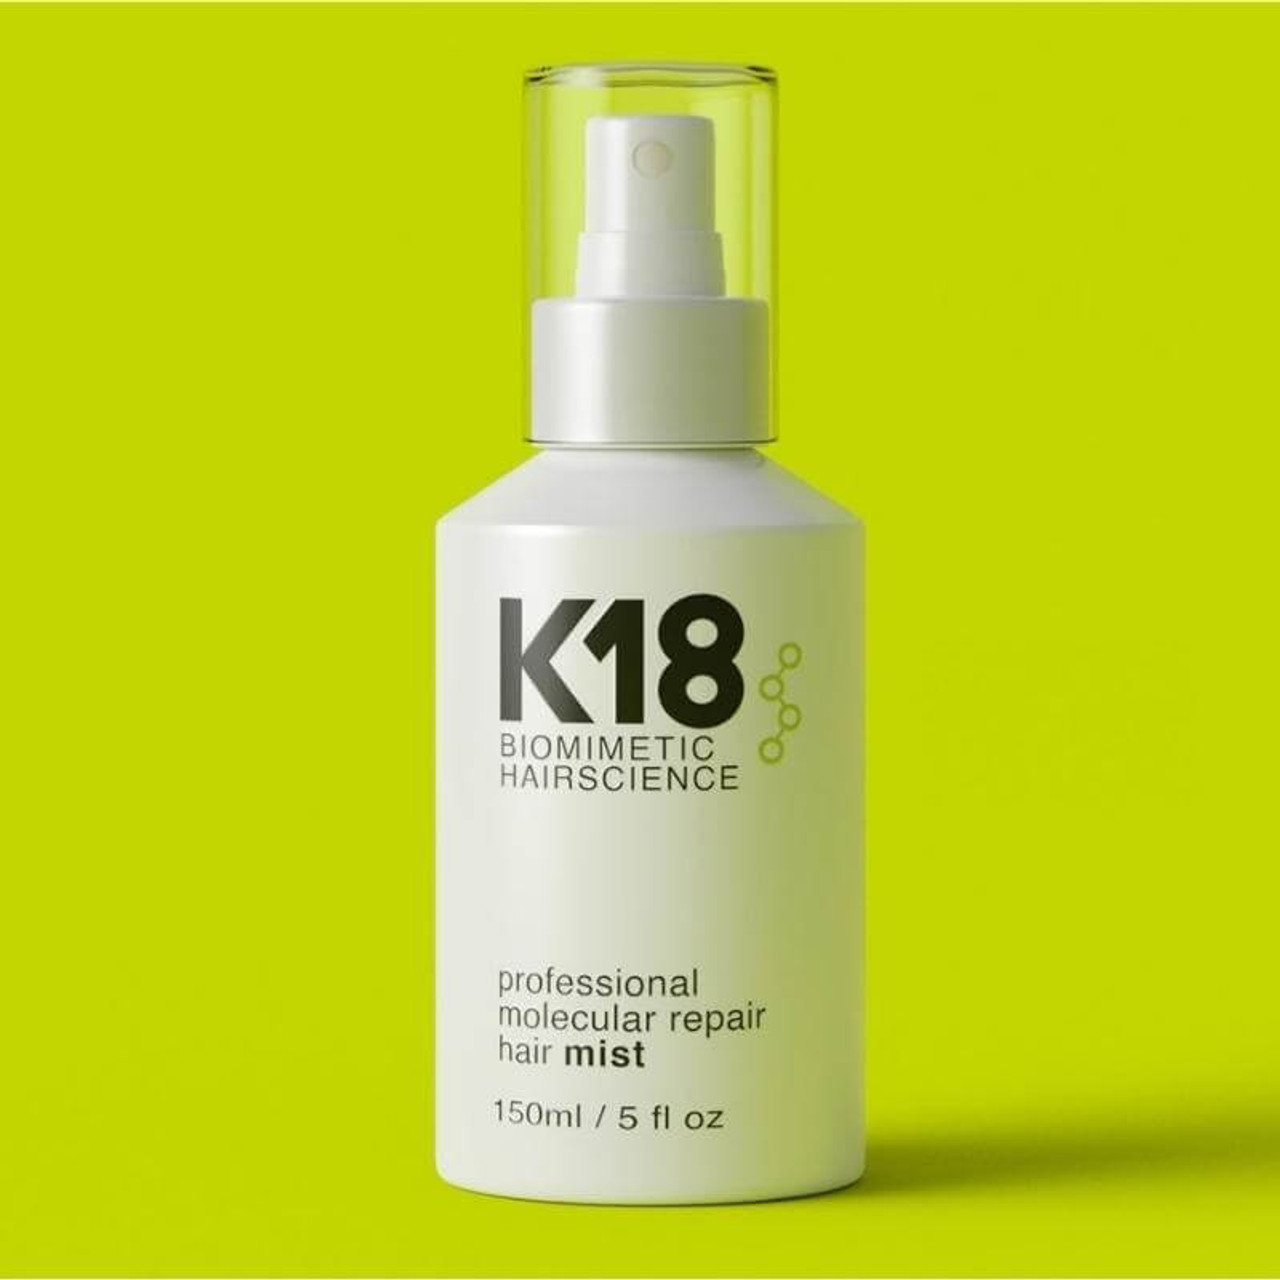 K18 Biomimetic Hairscience Professional Molecular Repair Mist 150ml 